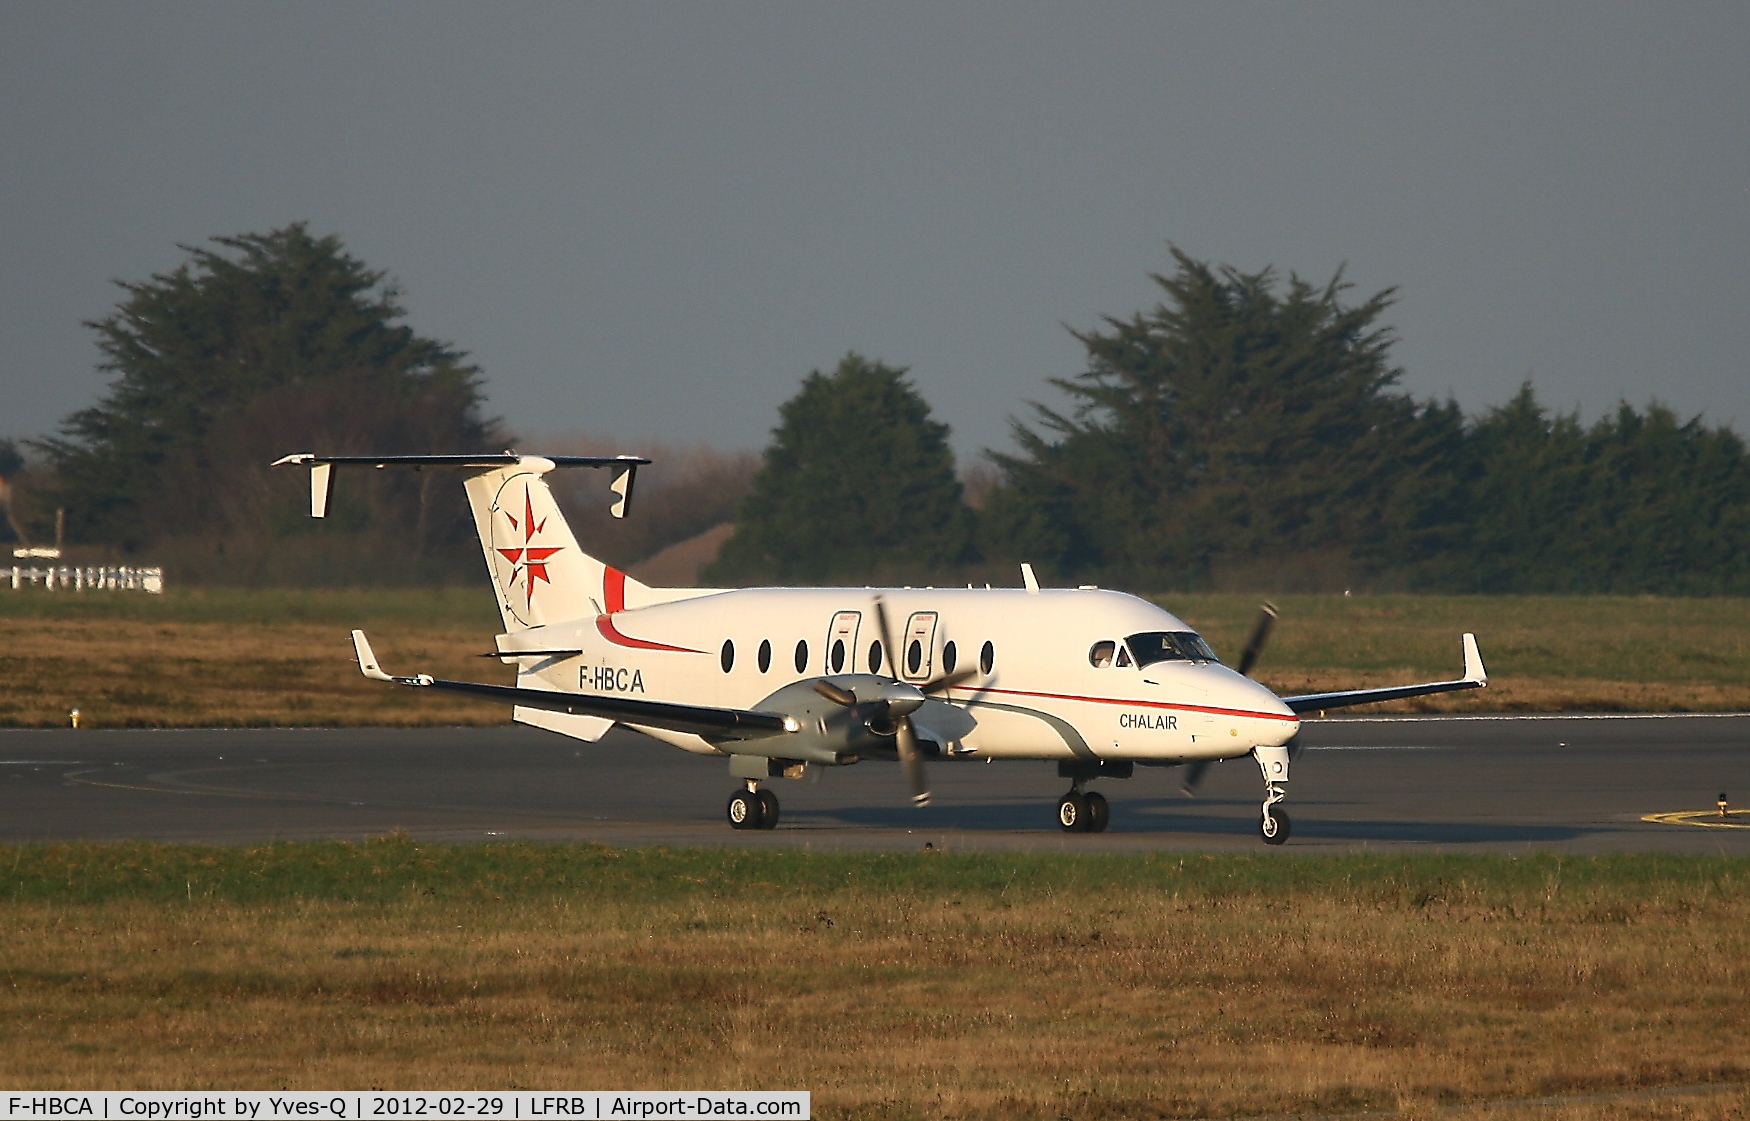 F-HBCA, 1995 Beech 1900D C/N UE-188, Beech 1900D, Taxiing to boarding area, Brest-Bretagne Airport (LFRB-BES)